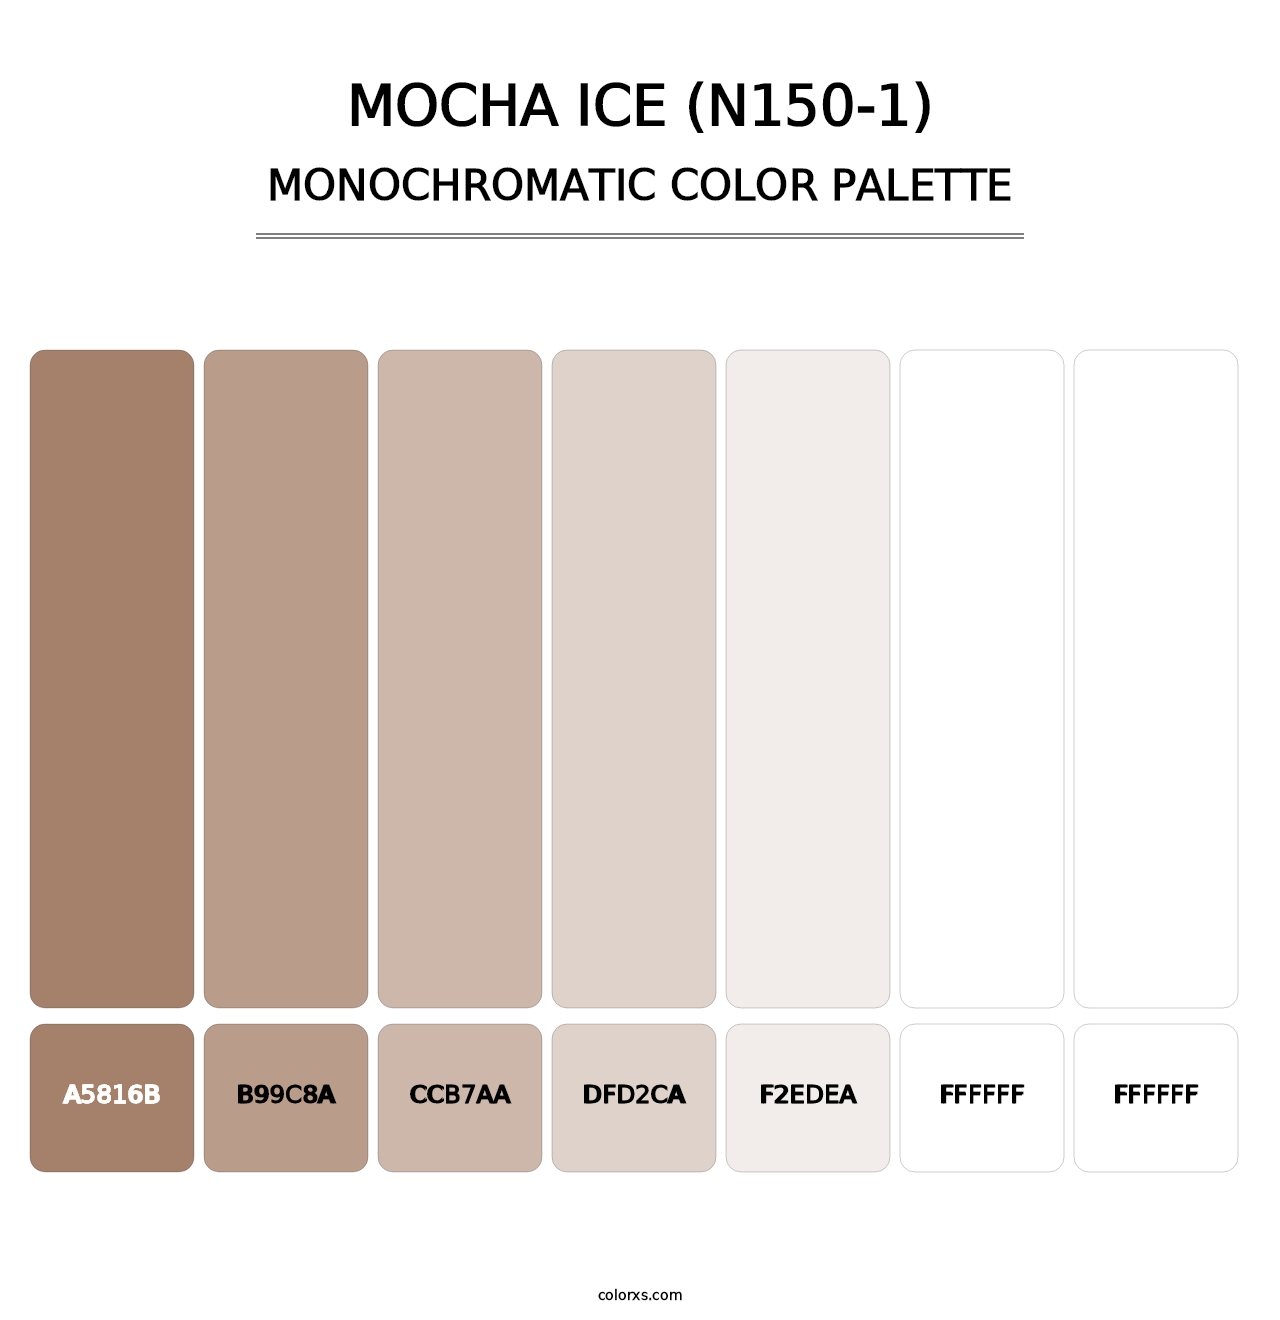 Mocha Ice (N150-1) - Monochromatic Color Palette